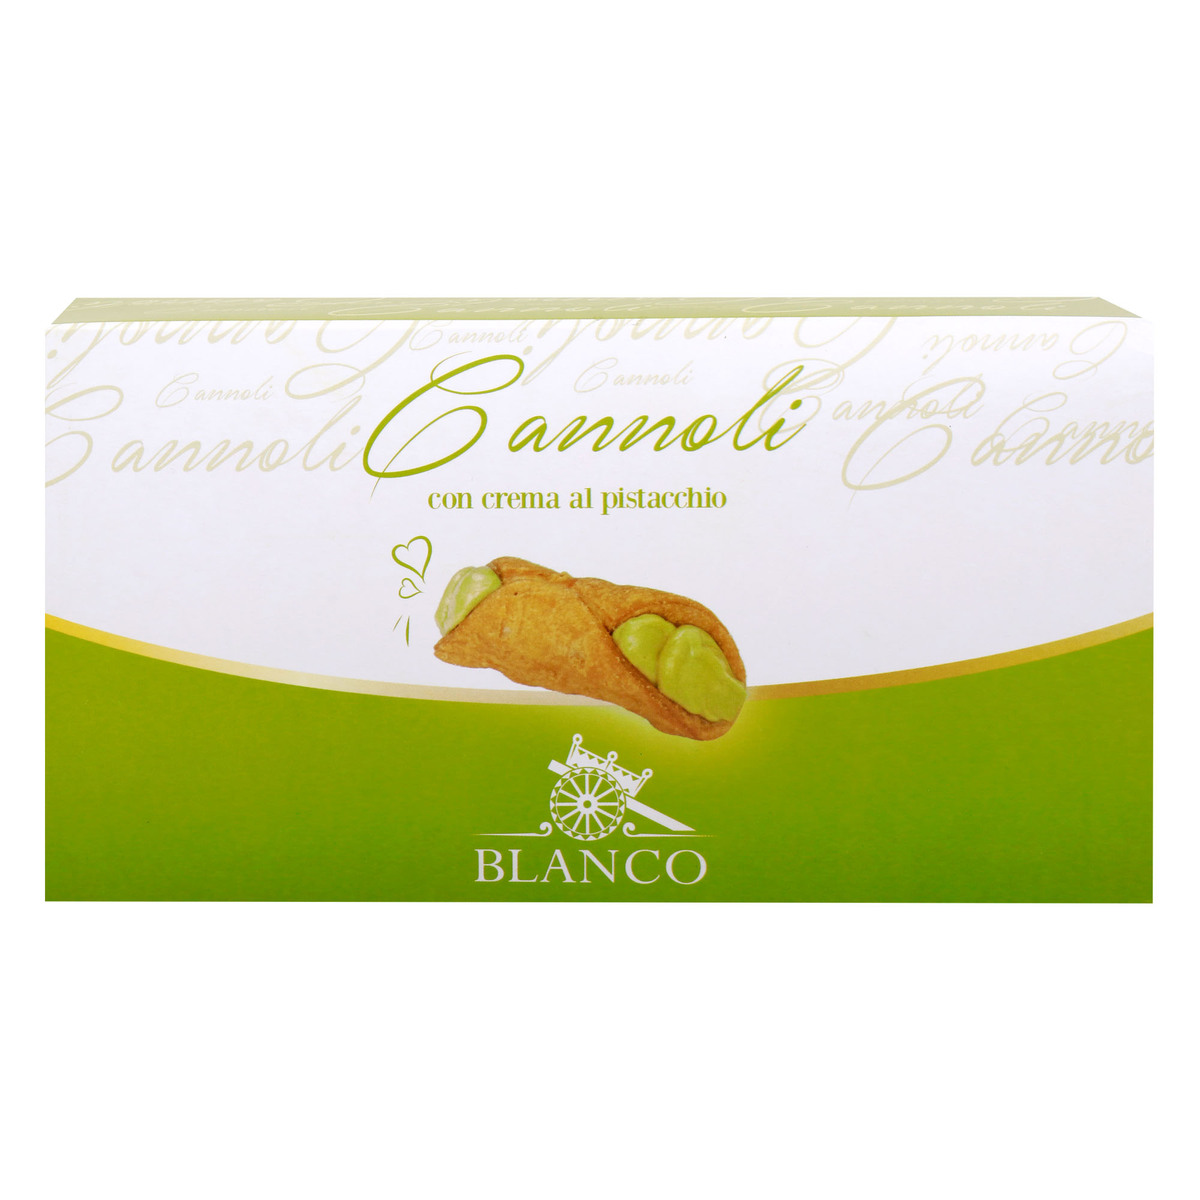 Blanco Cannoli Sweet Pistachio, 180 g